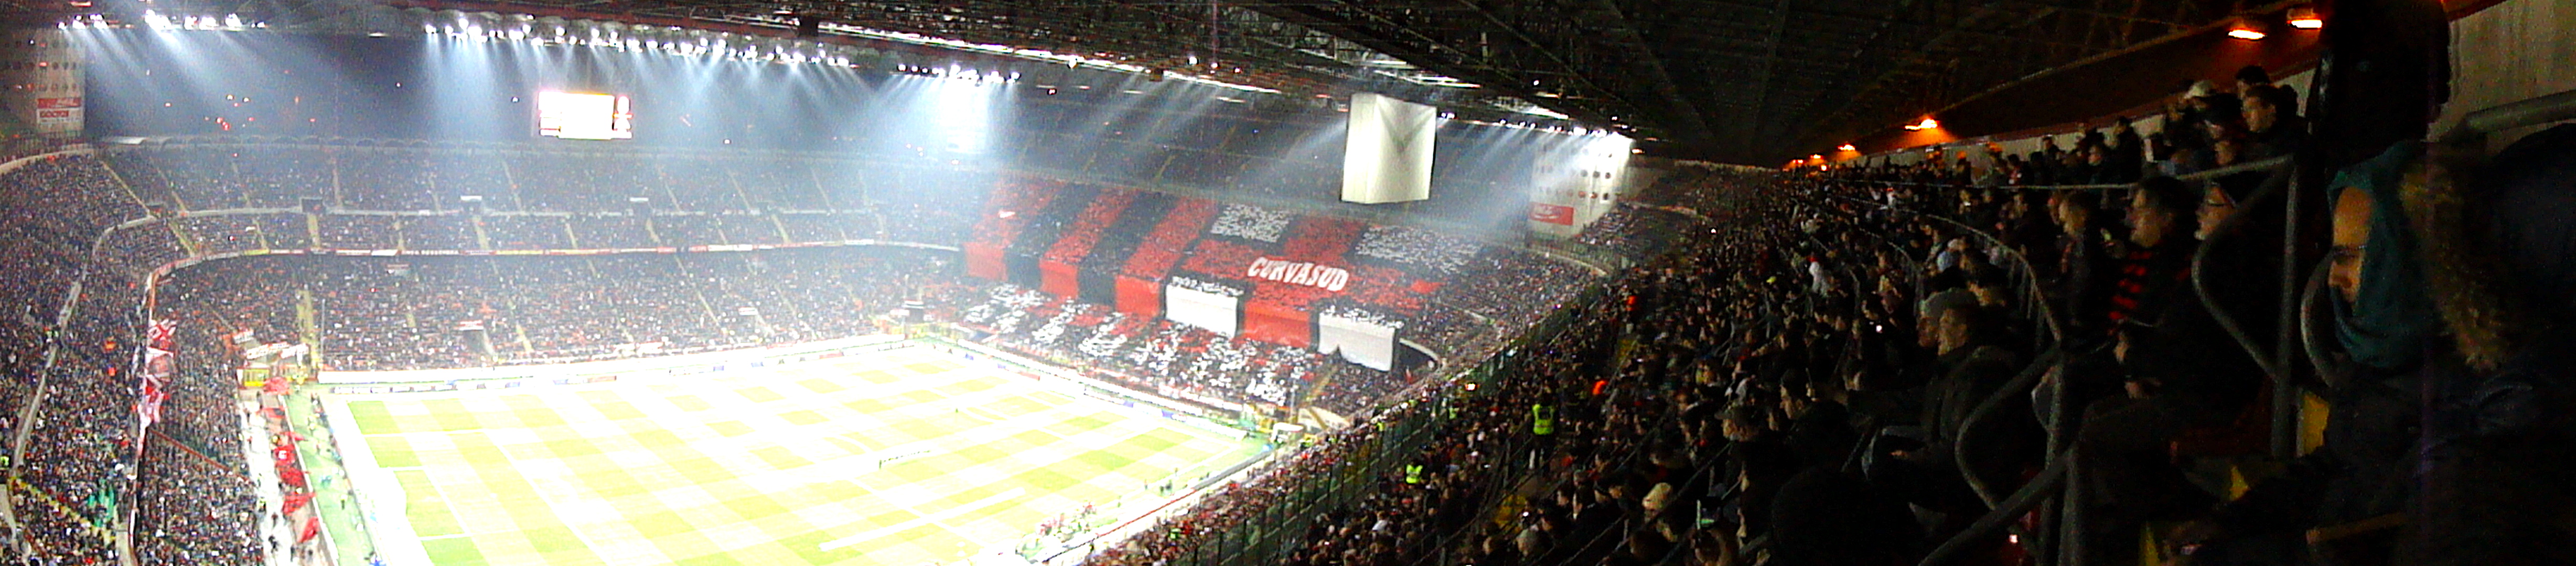 San Siro Stadium loaded with Milan fans